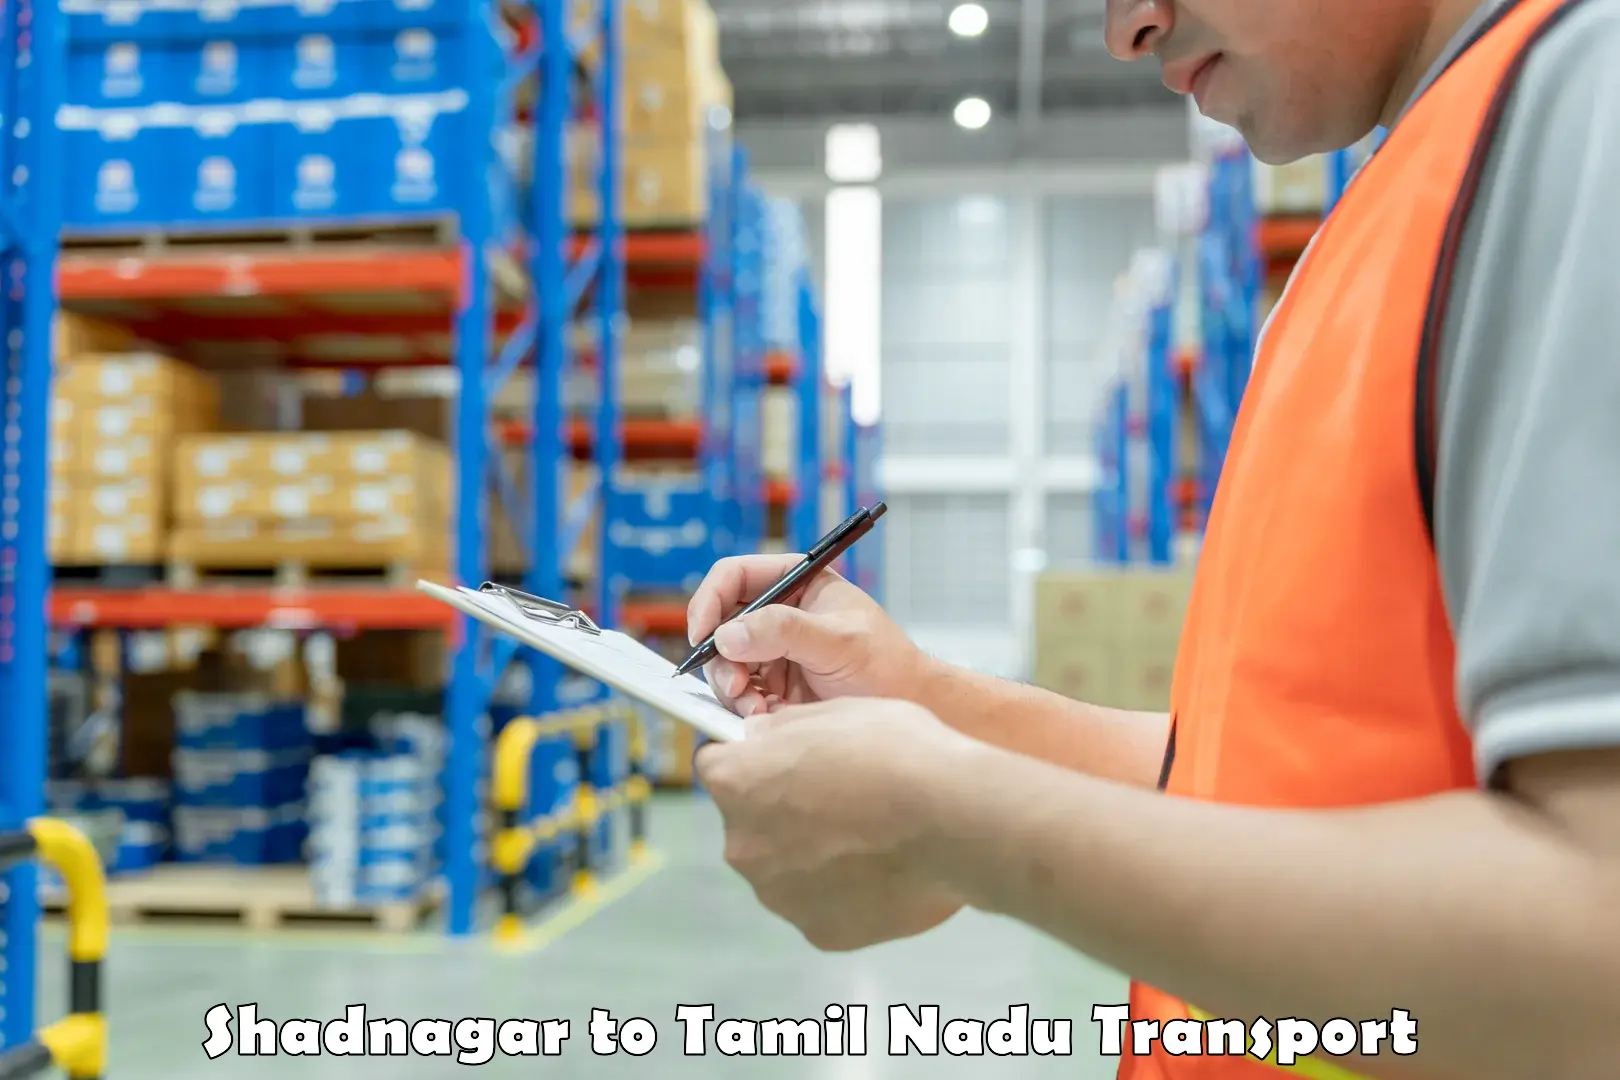 Container transport service Shadnagar to Tamil Nadu